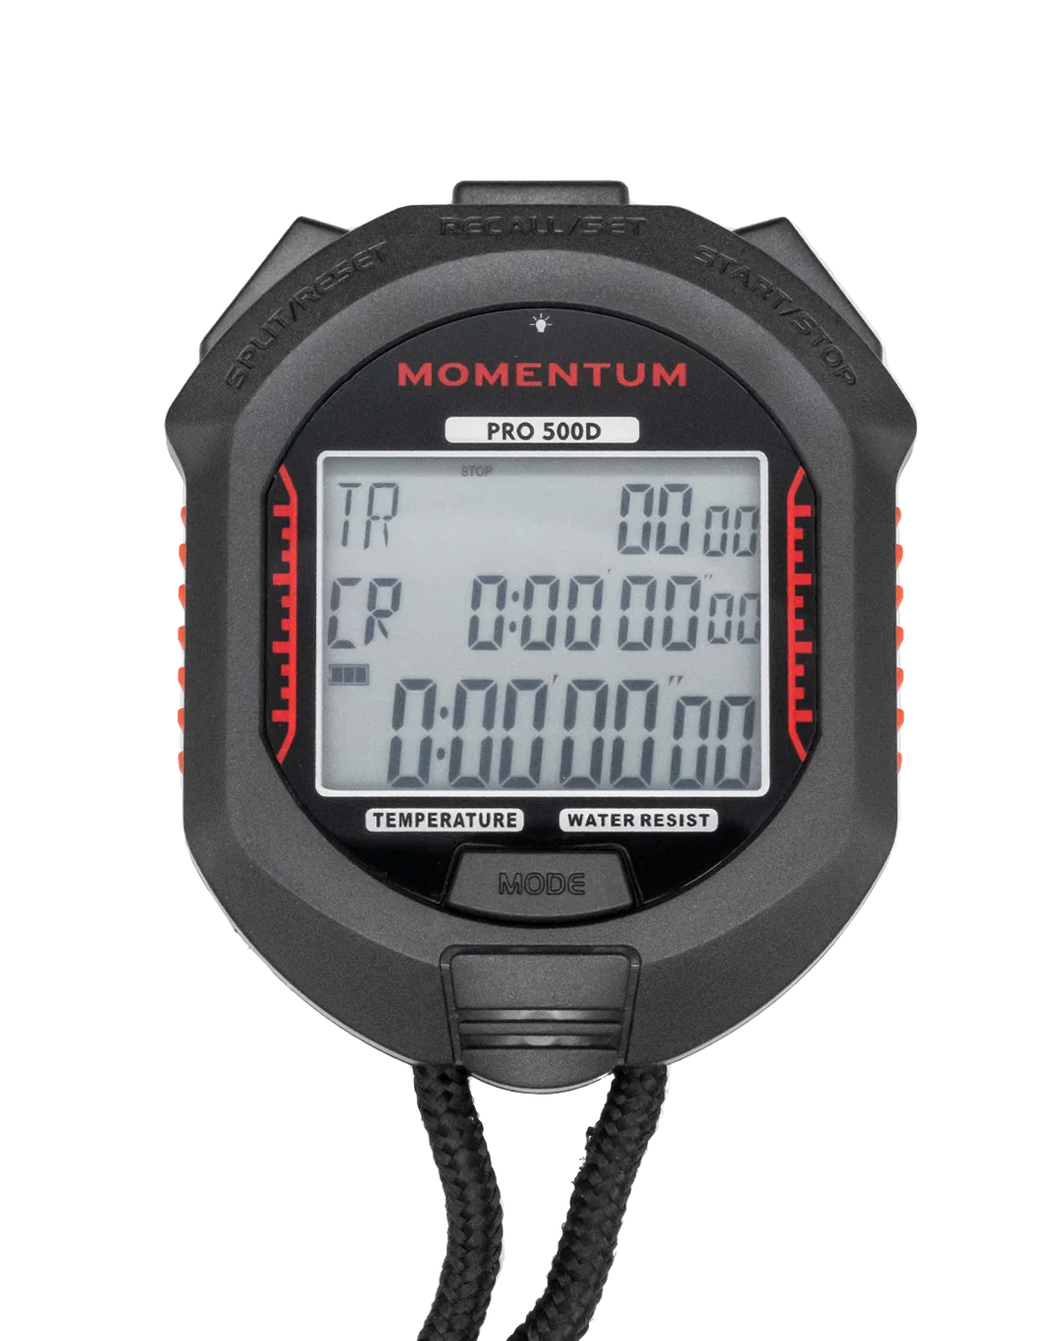 St. Moritz Pro 500D Stopwatch